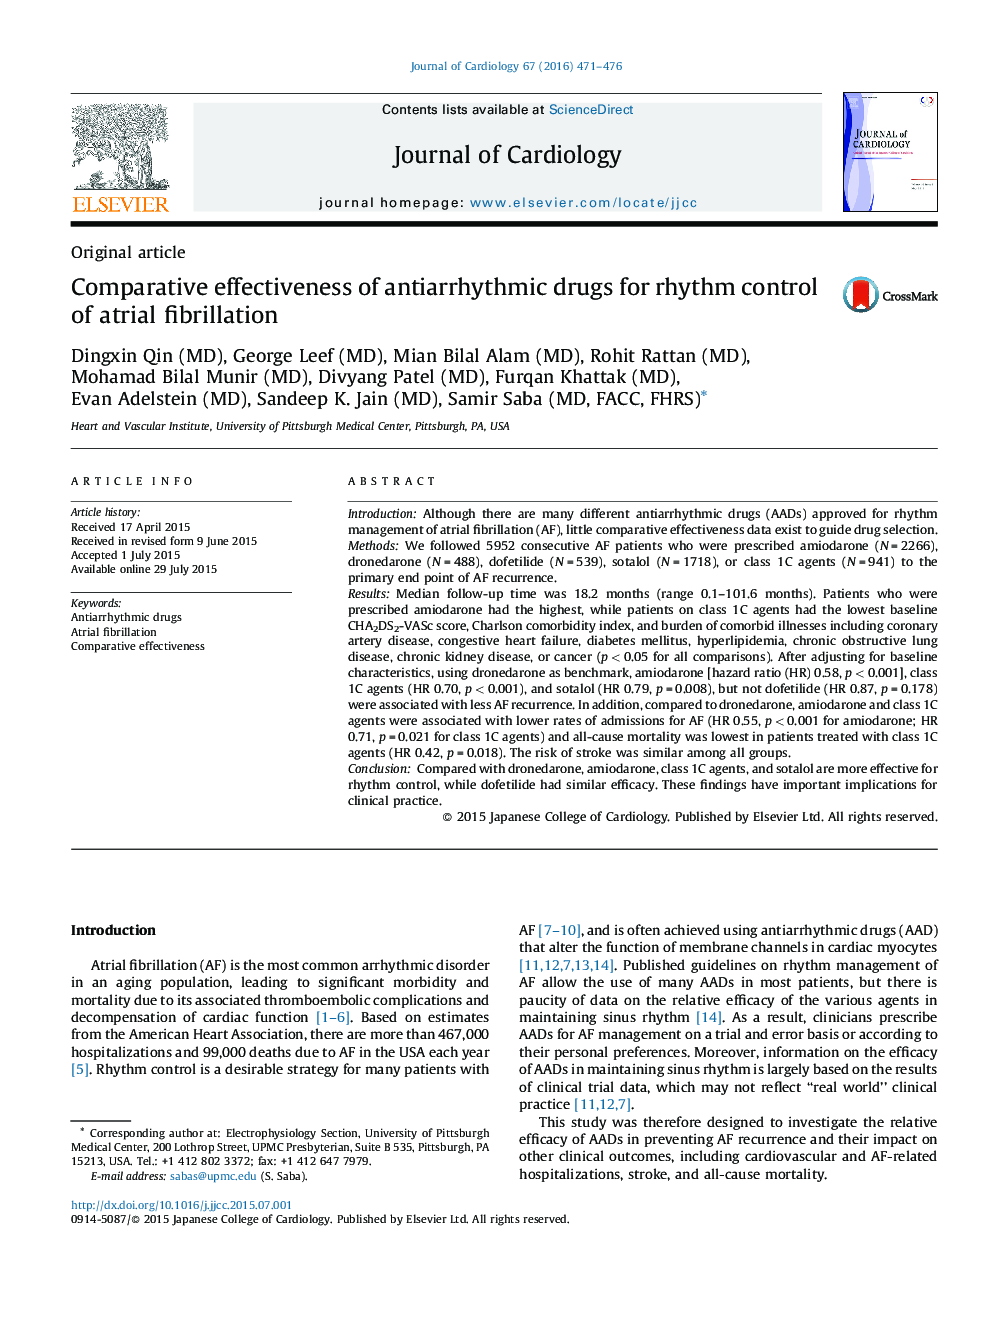 Comparative effectiveness of antiarrhythmic drugs for rhythm control of atrial fibrillation